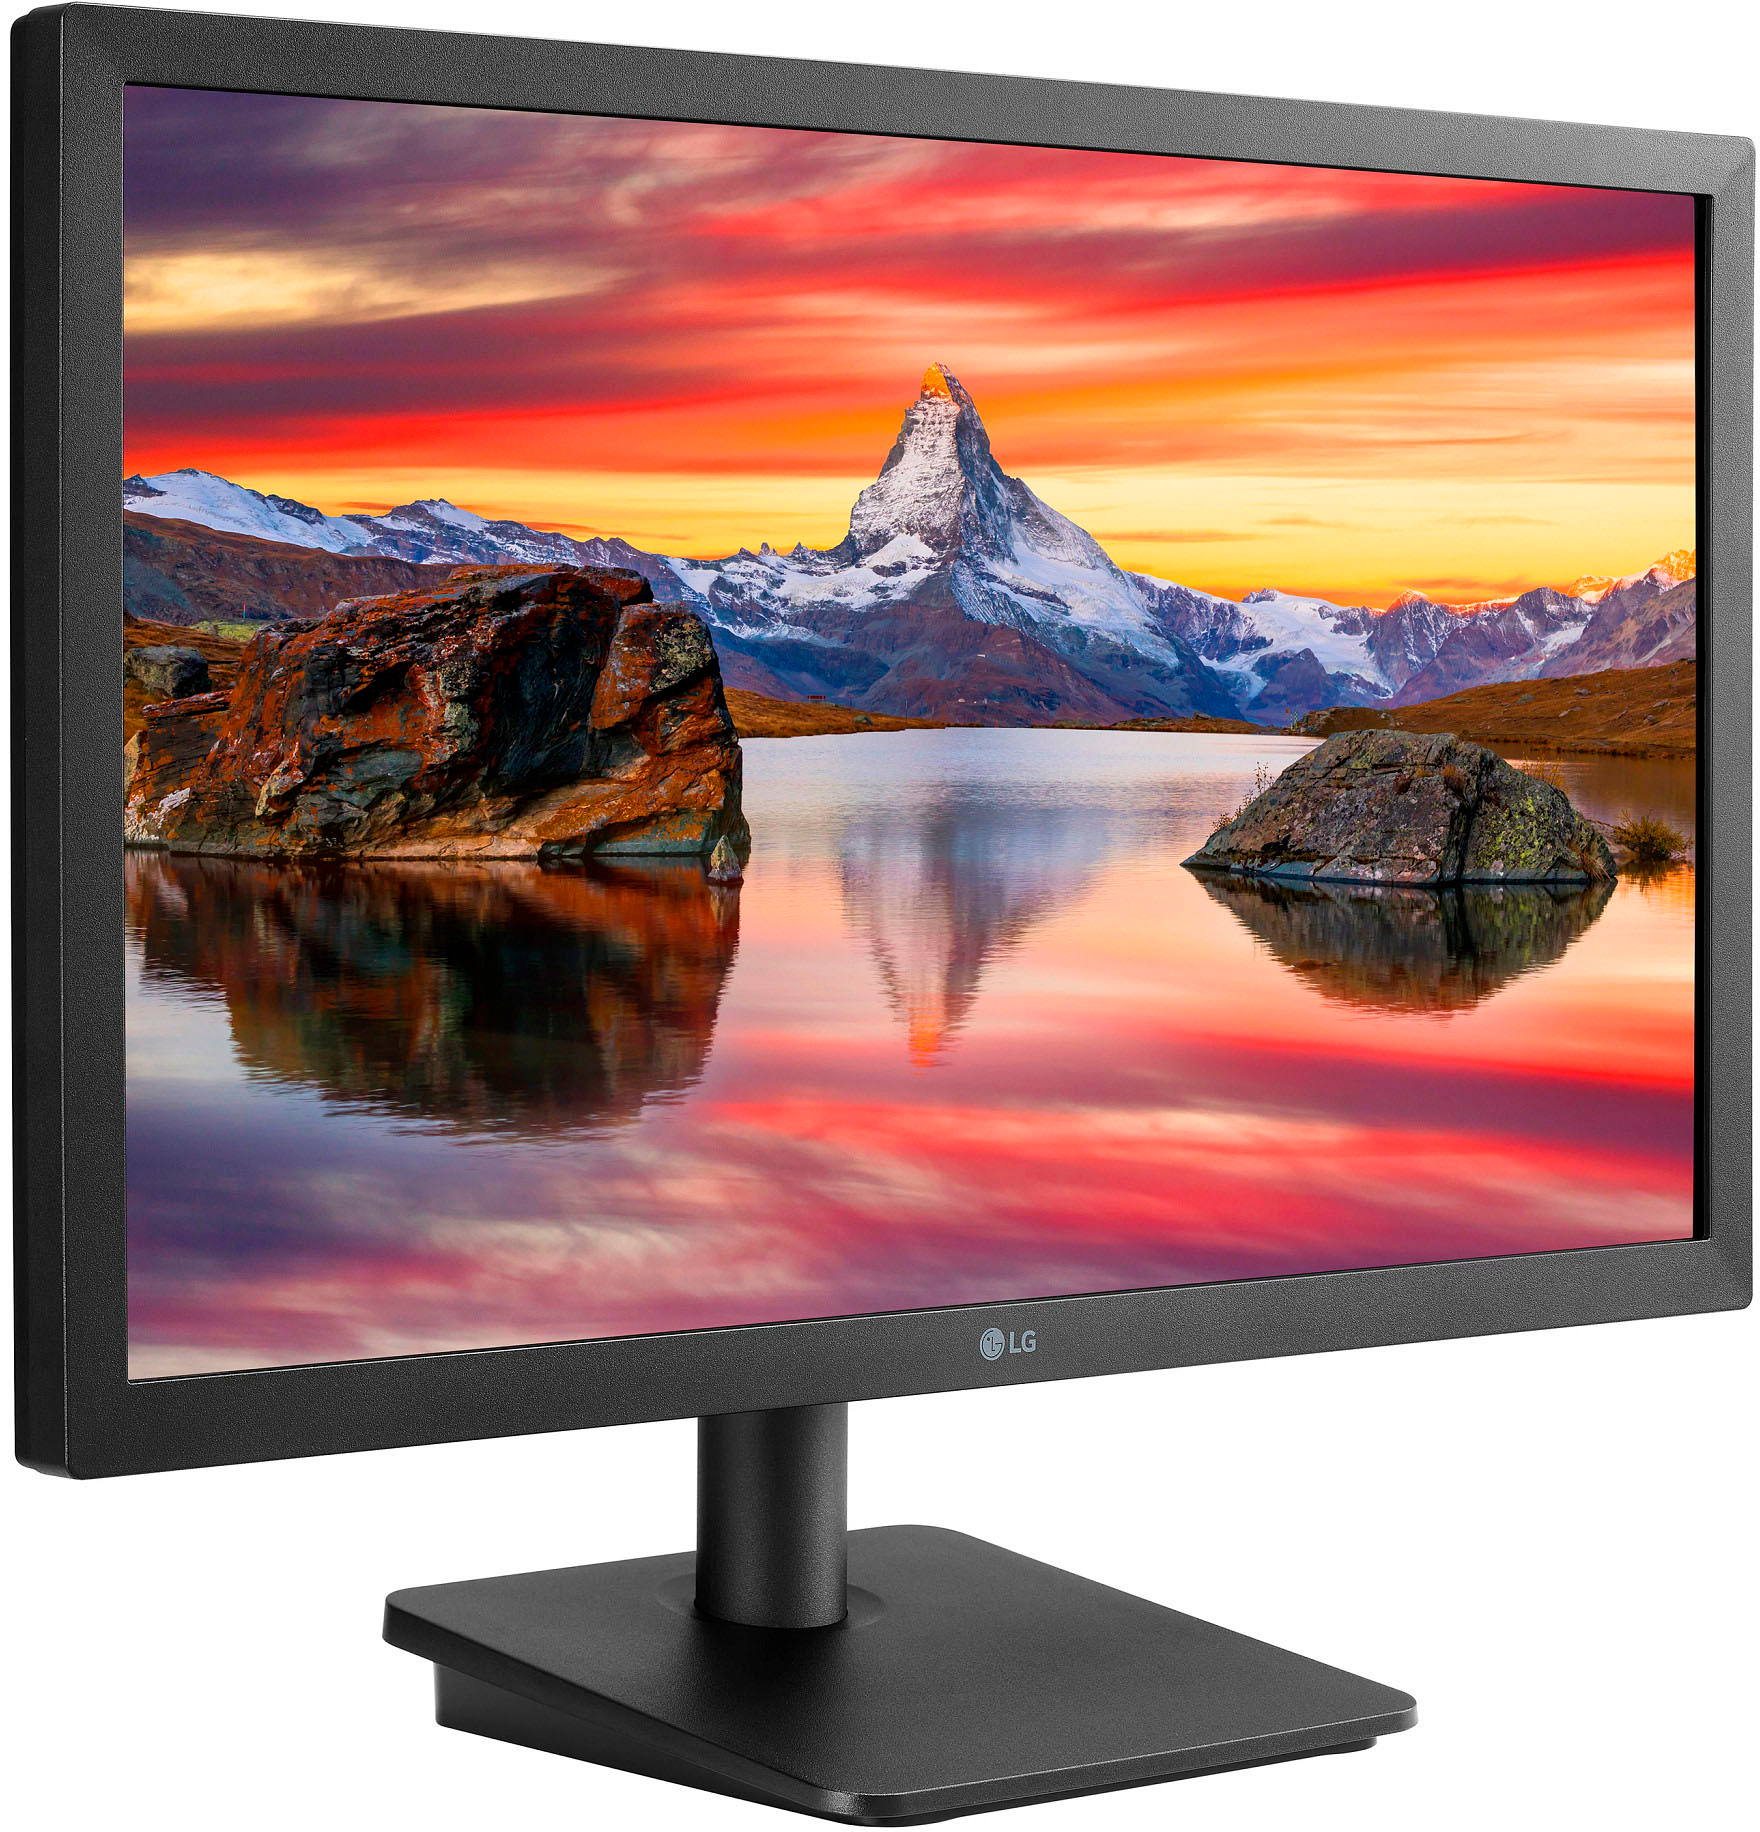 huichelarij Verhoog jezelf Keizer LG 22” LED FHD FreeSync Monitor (HDMI) Black 22MP400-B - Best Buy